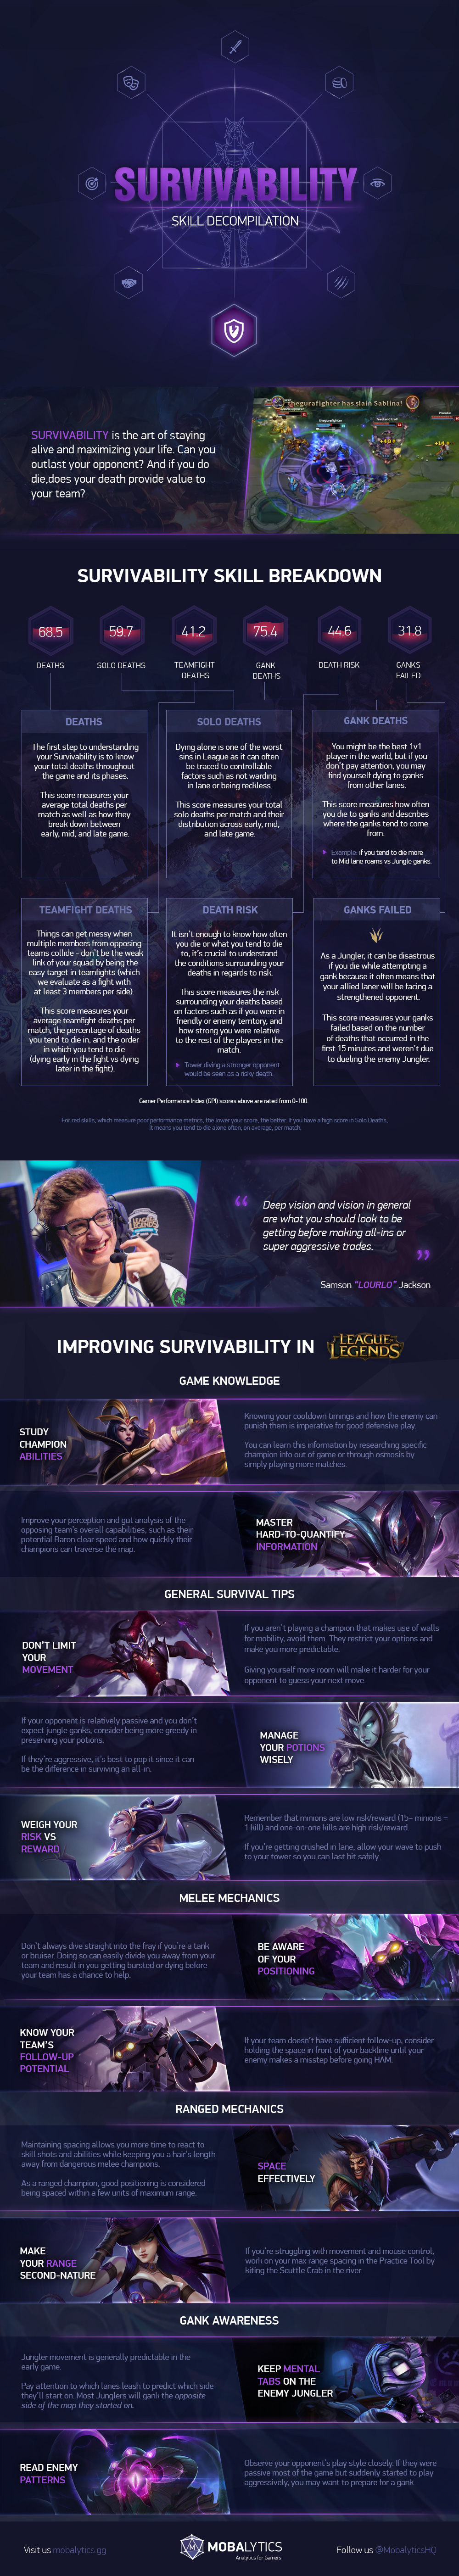 Survivability 2018 Infographic